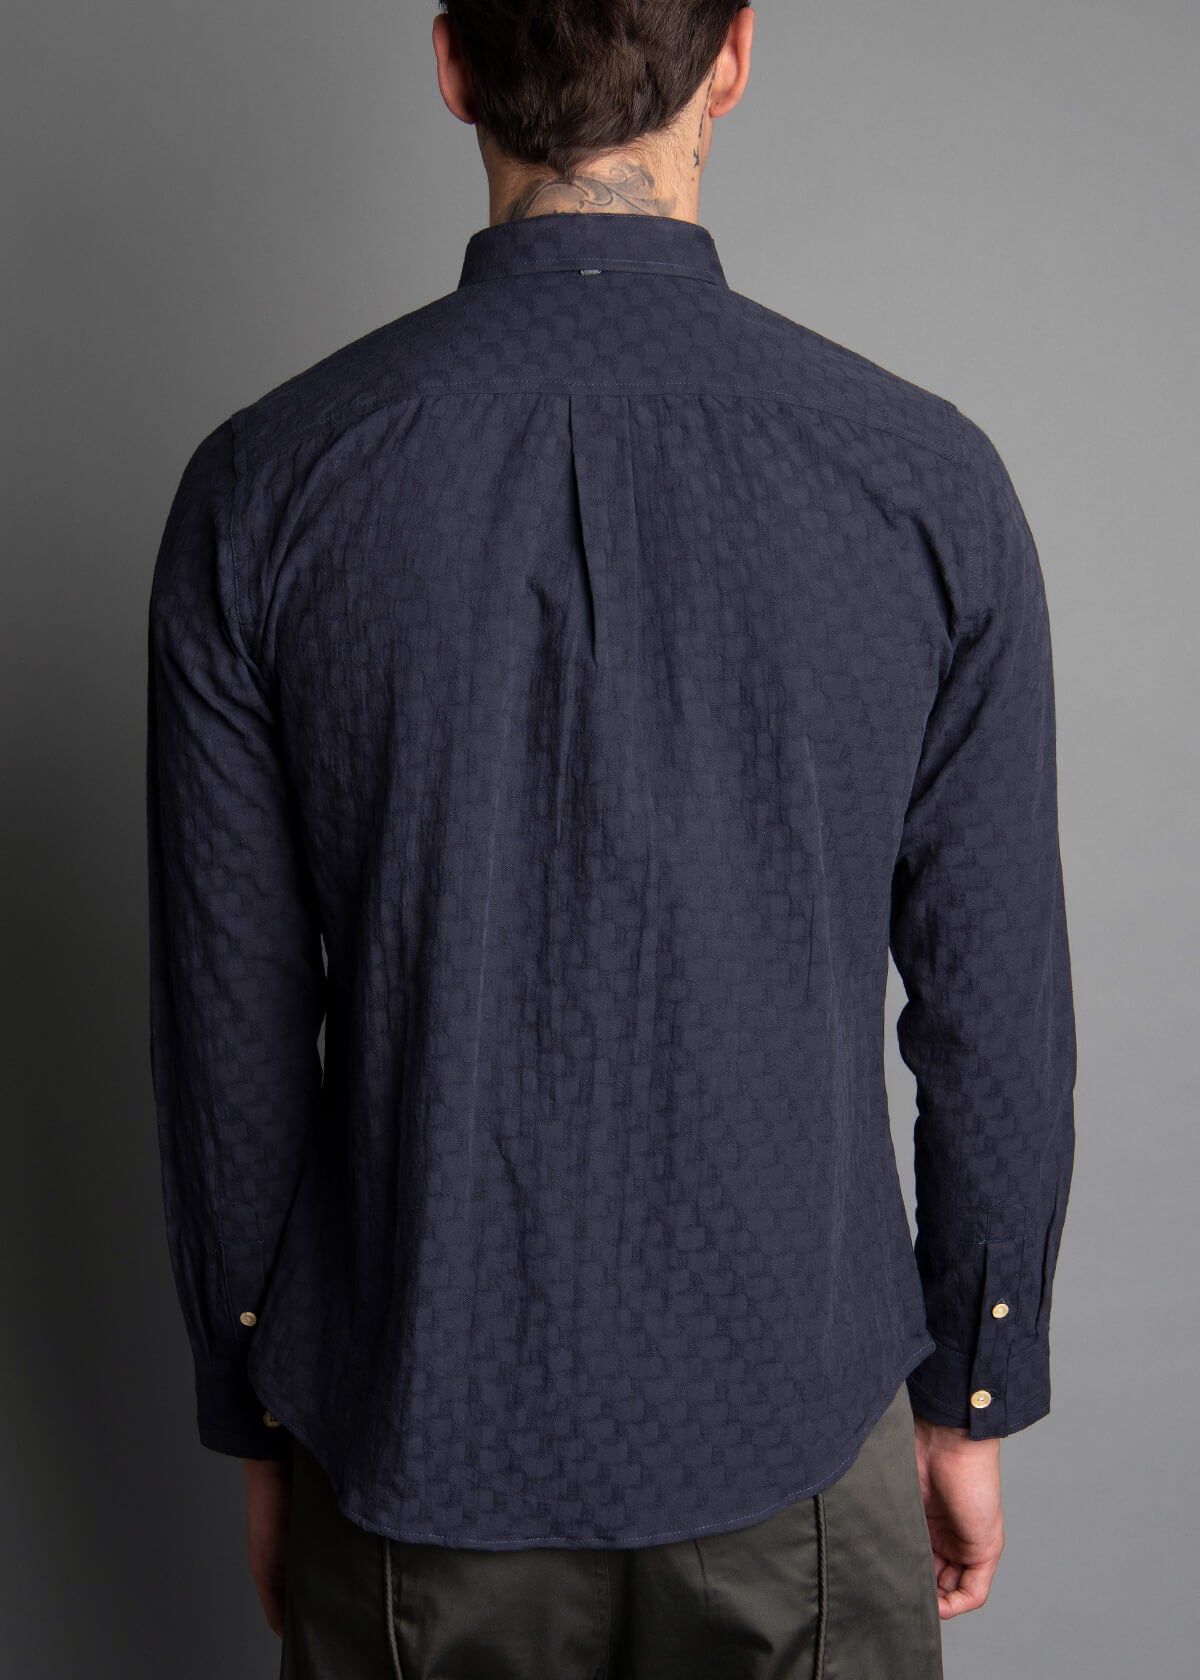 long sleeve navy blue jacquard shirt for men